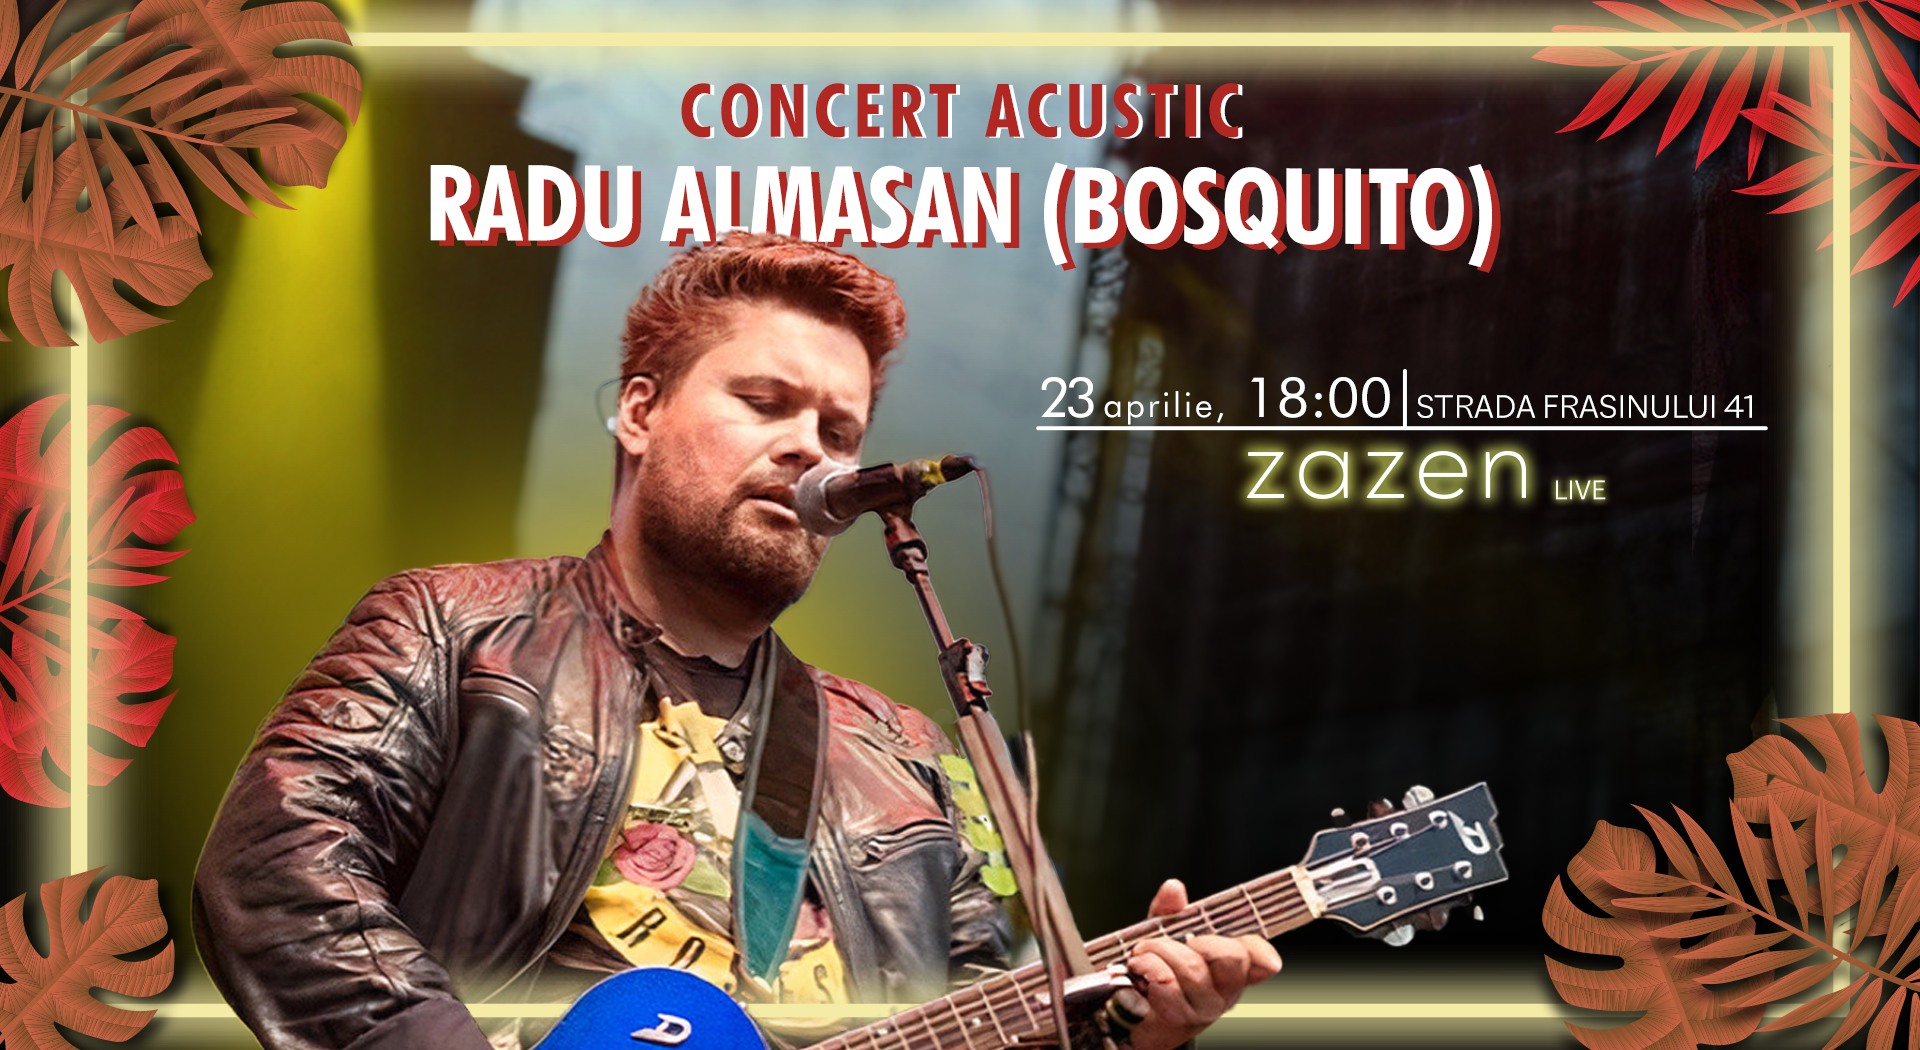 Concert Acustic Radu Almășan (Bosquito) - Zazen Live